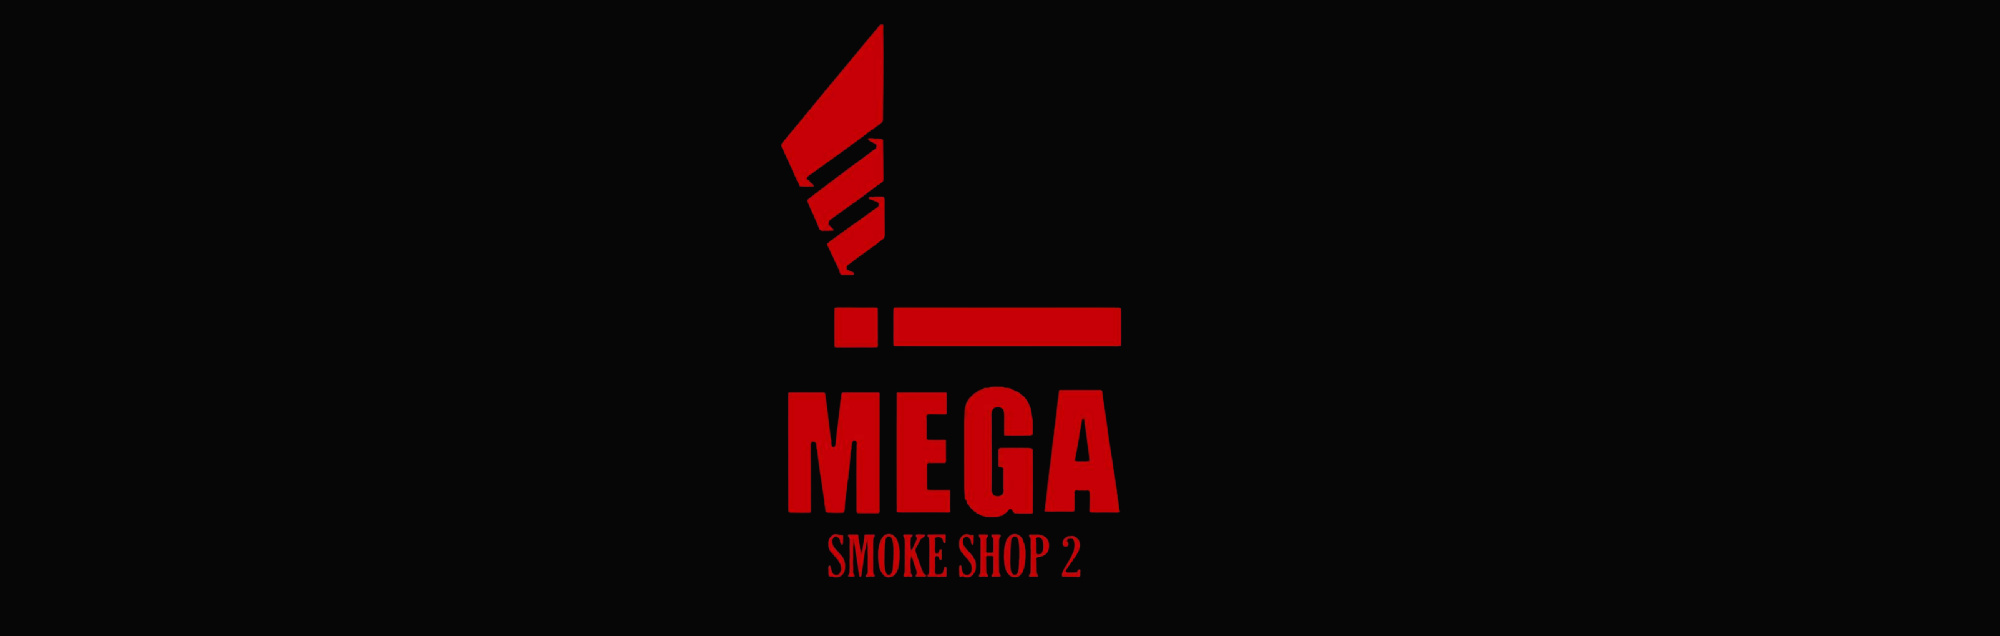 image mega smoke shop 2 in jacksonville fl